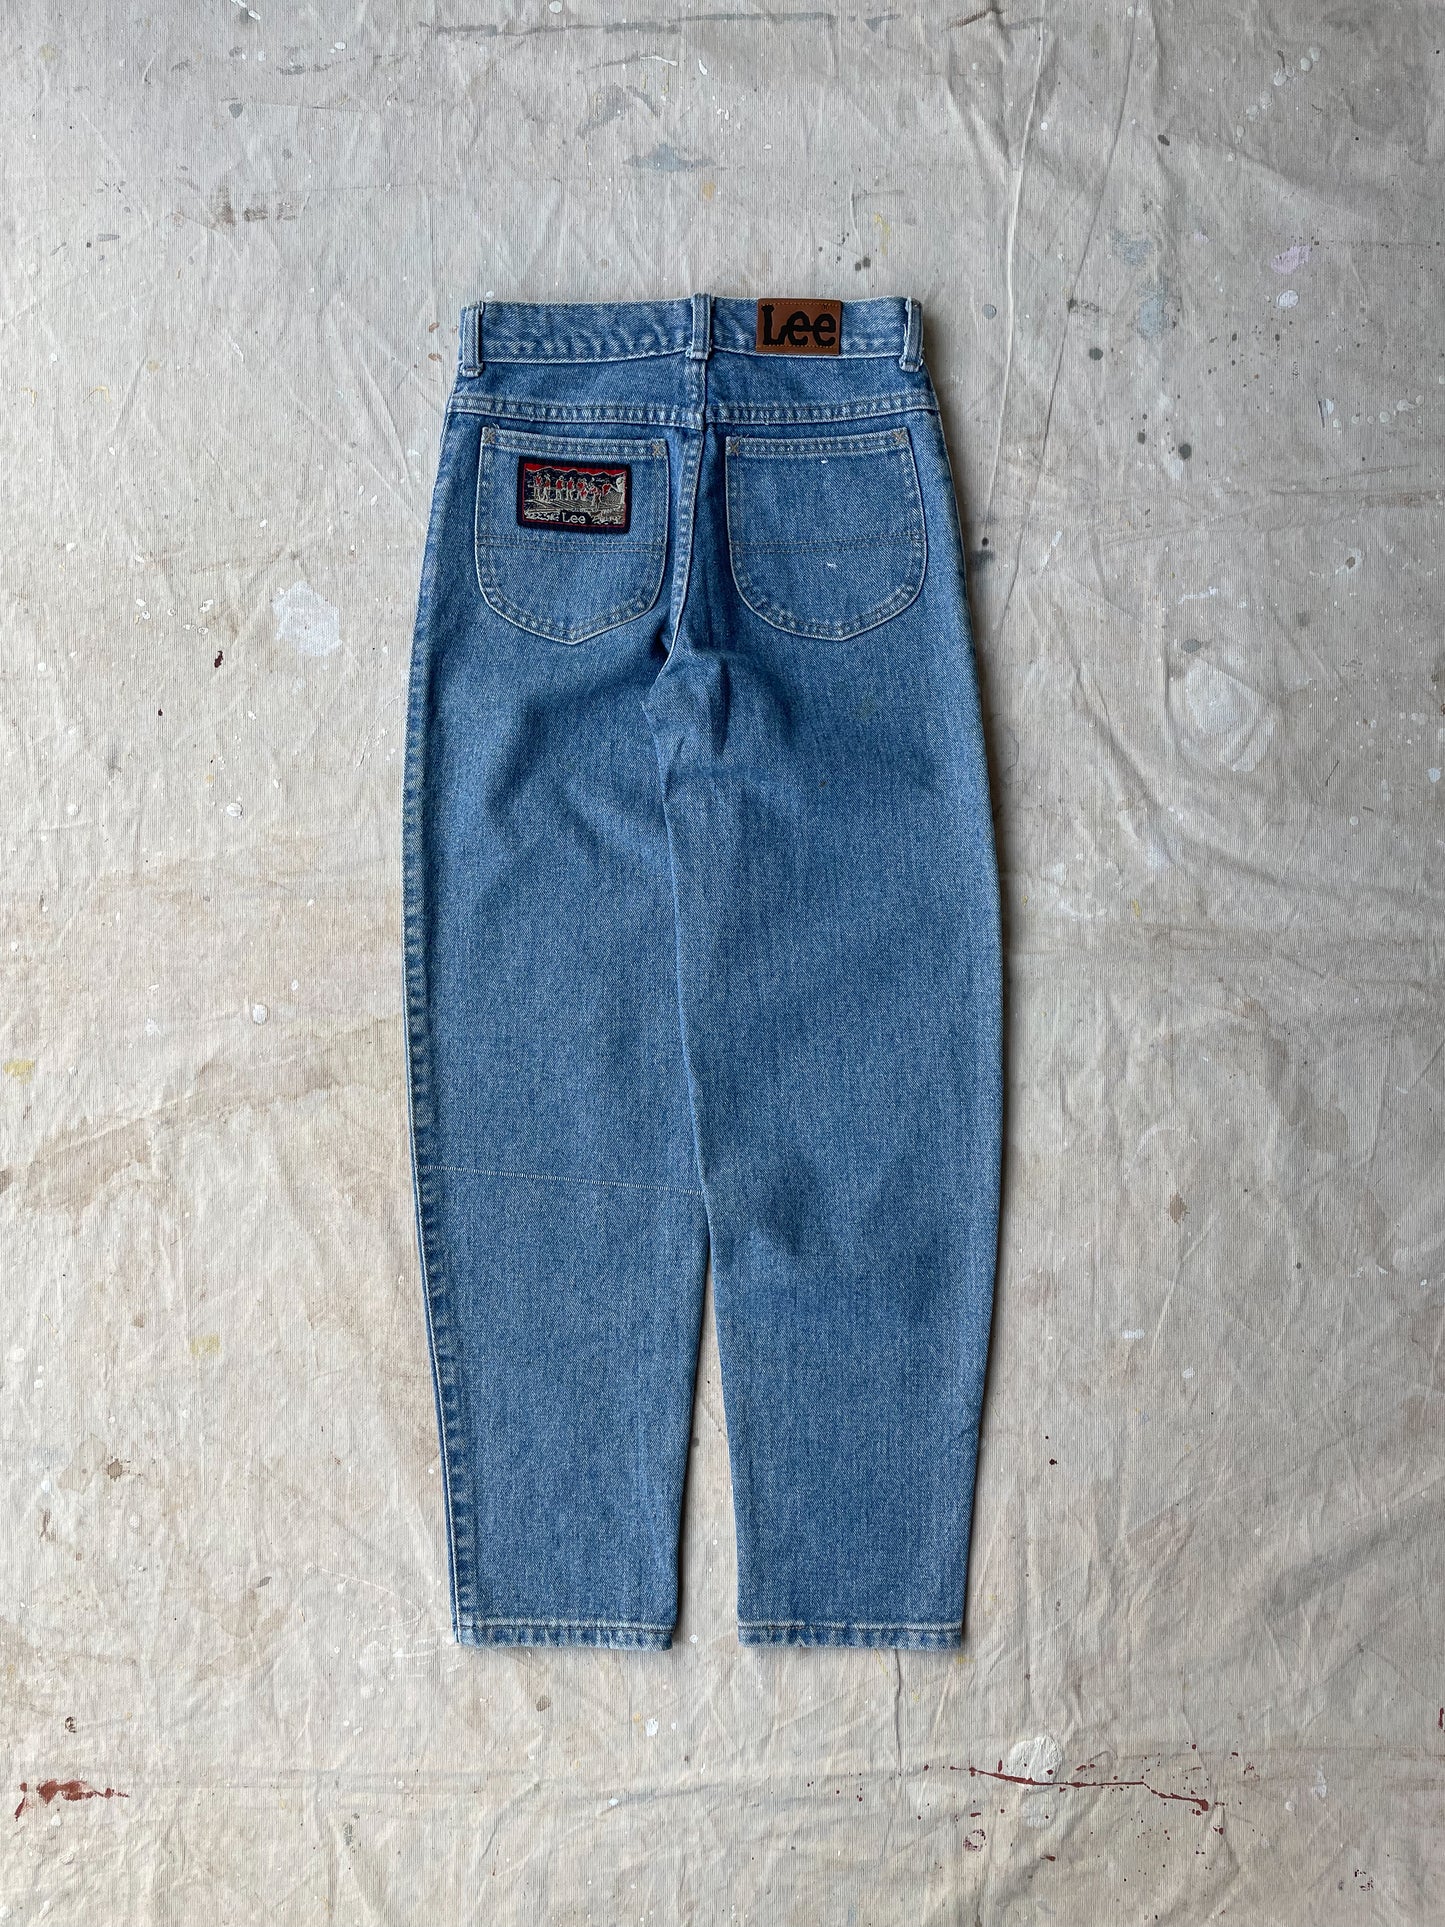 Lee Jeans—[26x29]